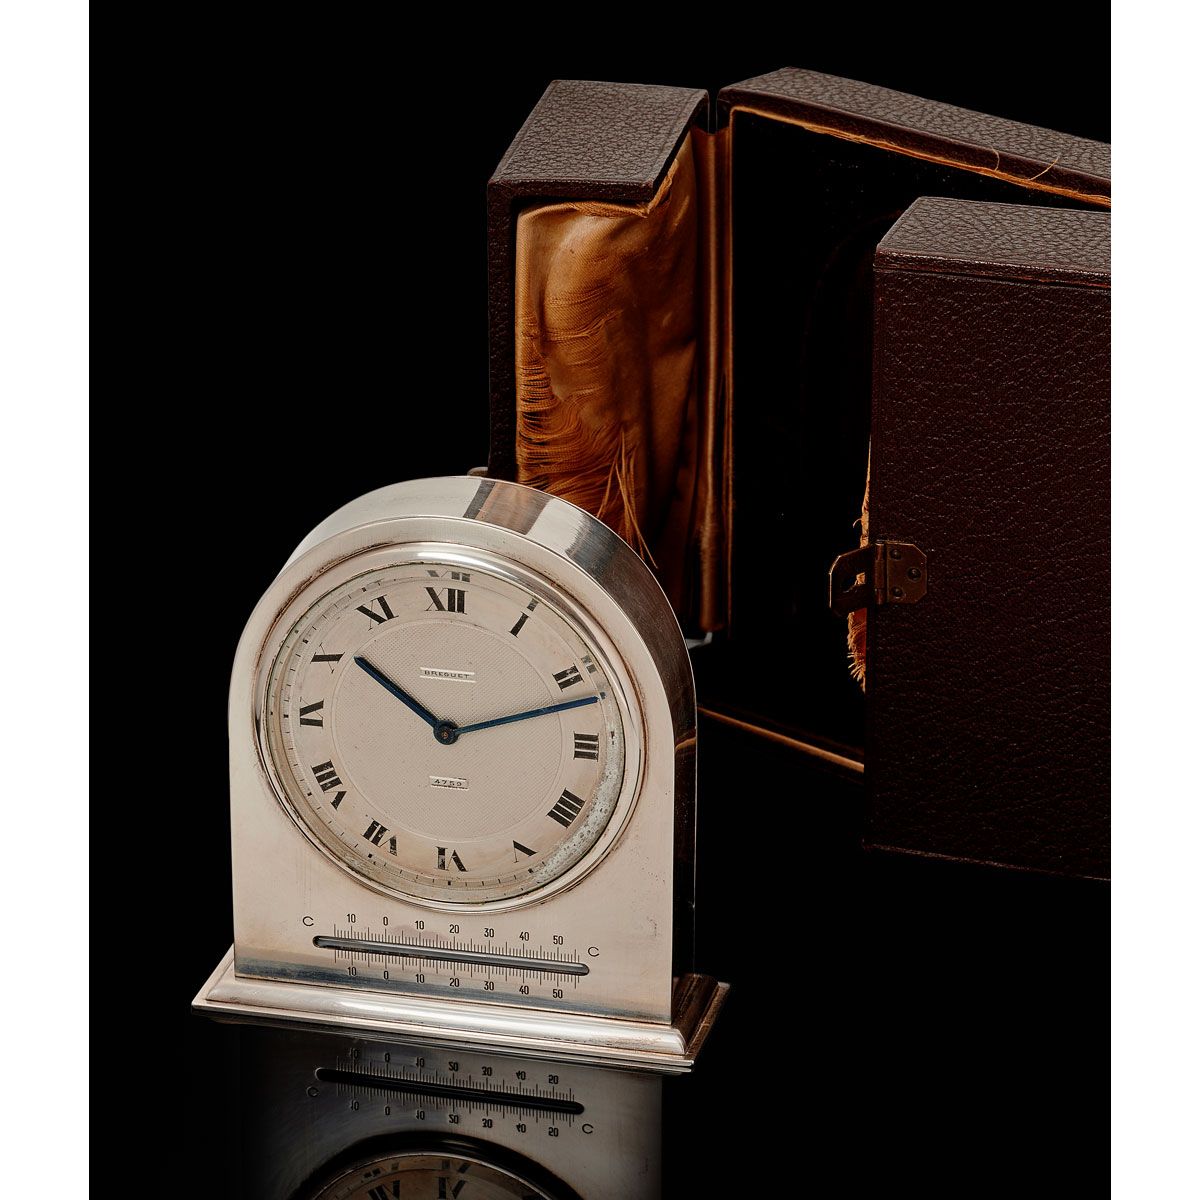 Null Breguet, reloj de hito, nº 4759, hacia 1930.

Raro reloj Art Decó de plata &hellip;